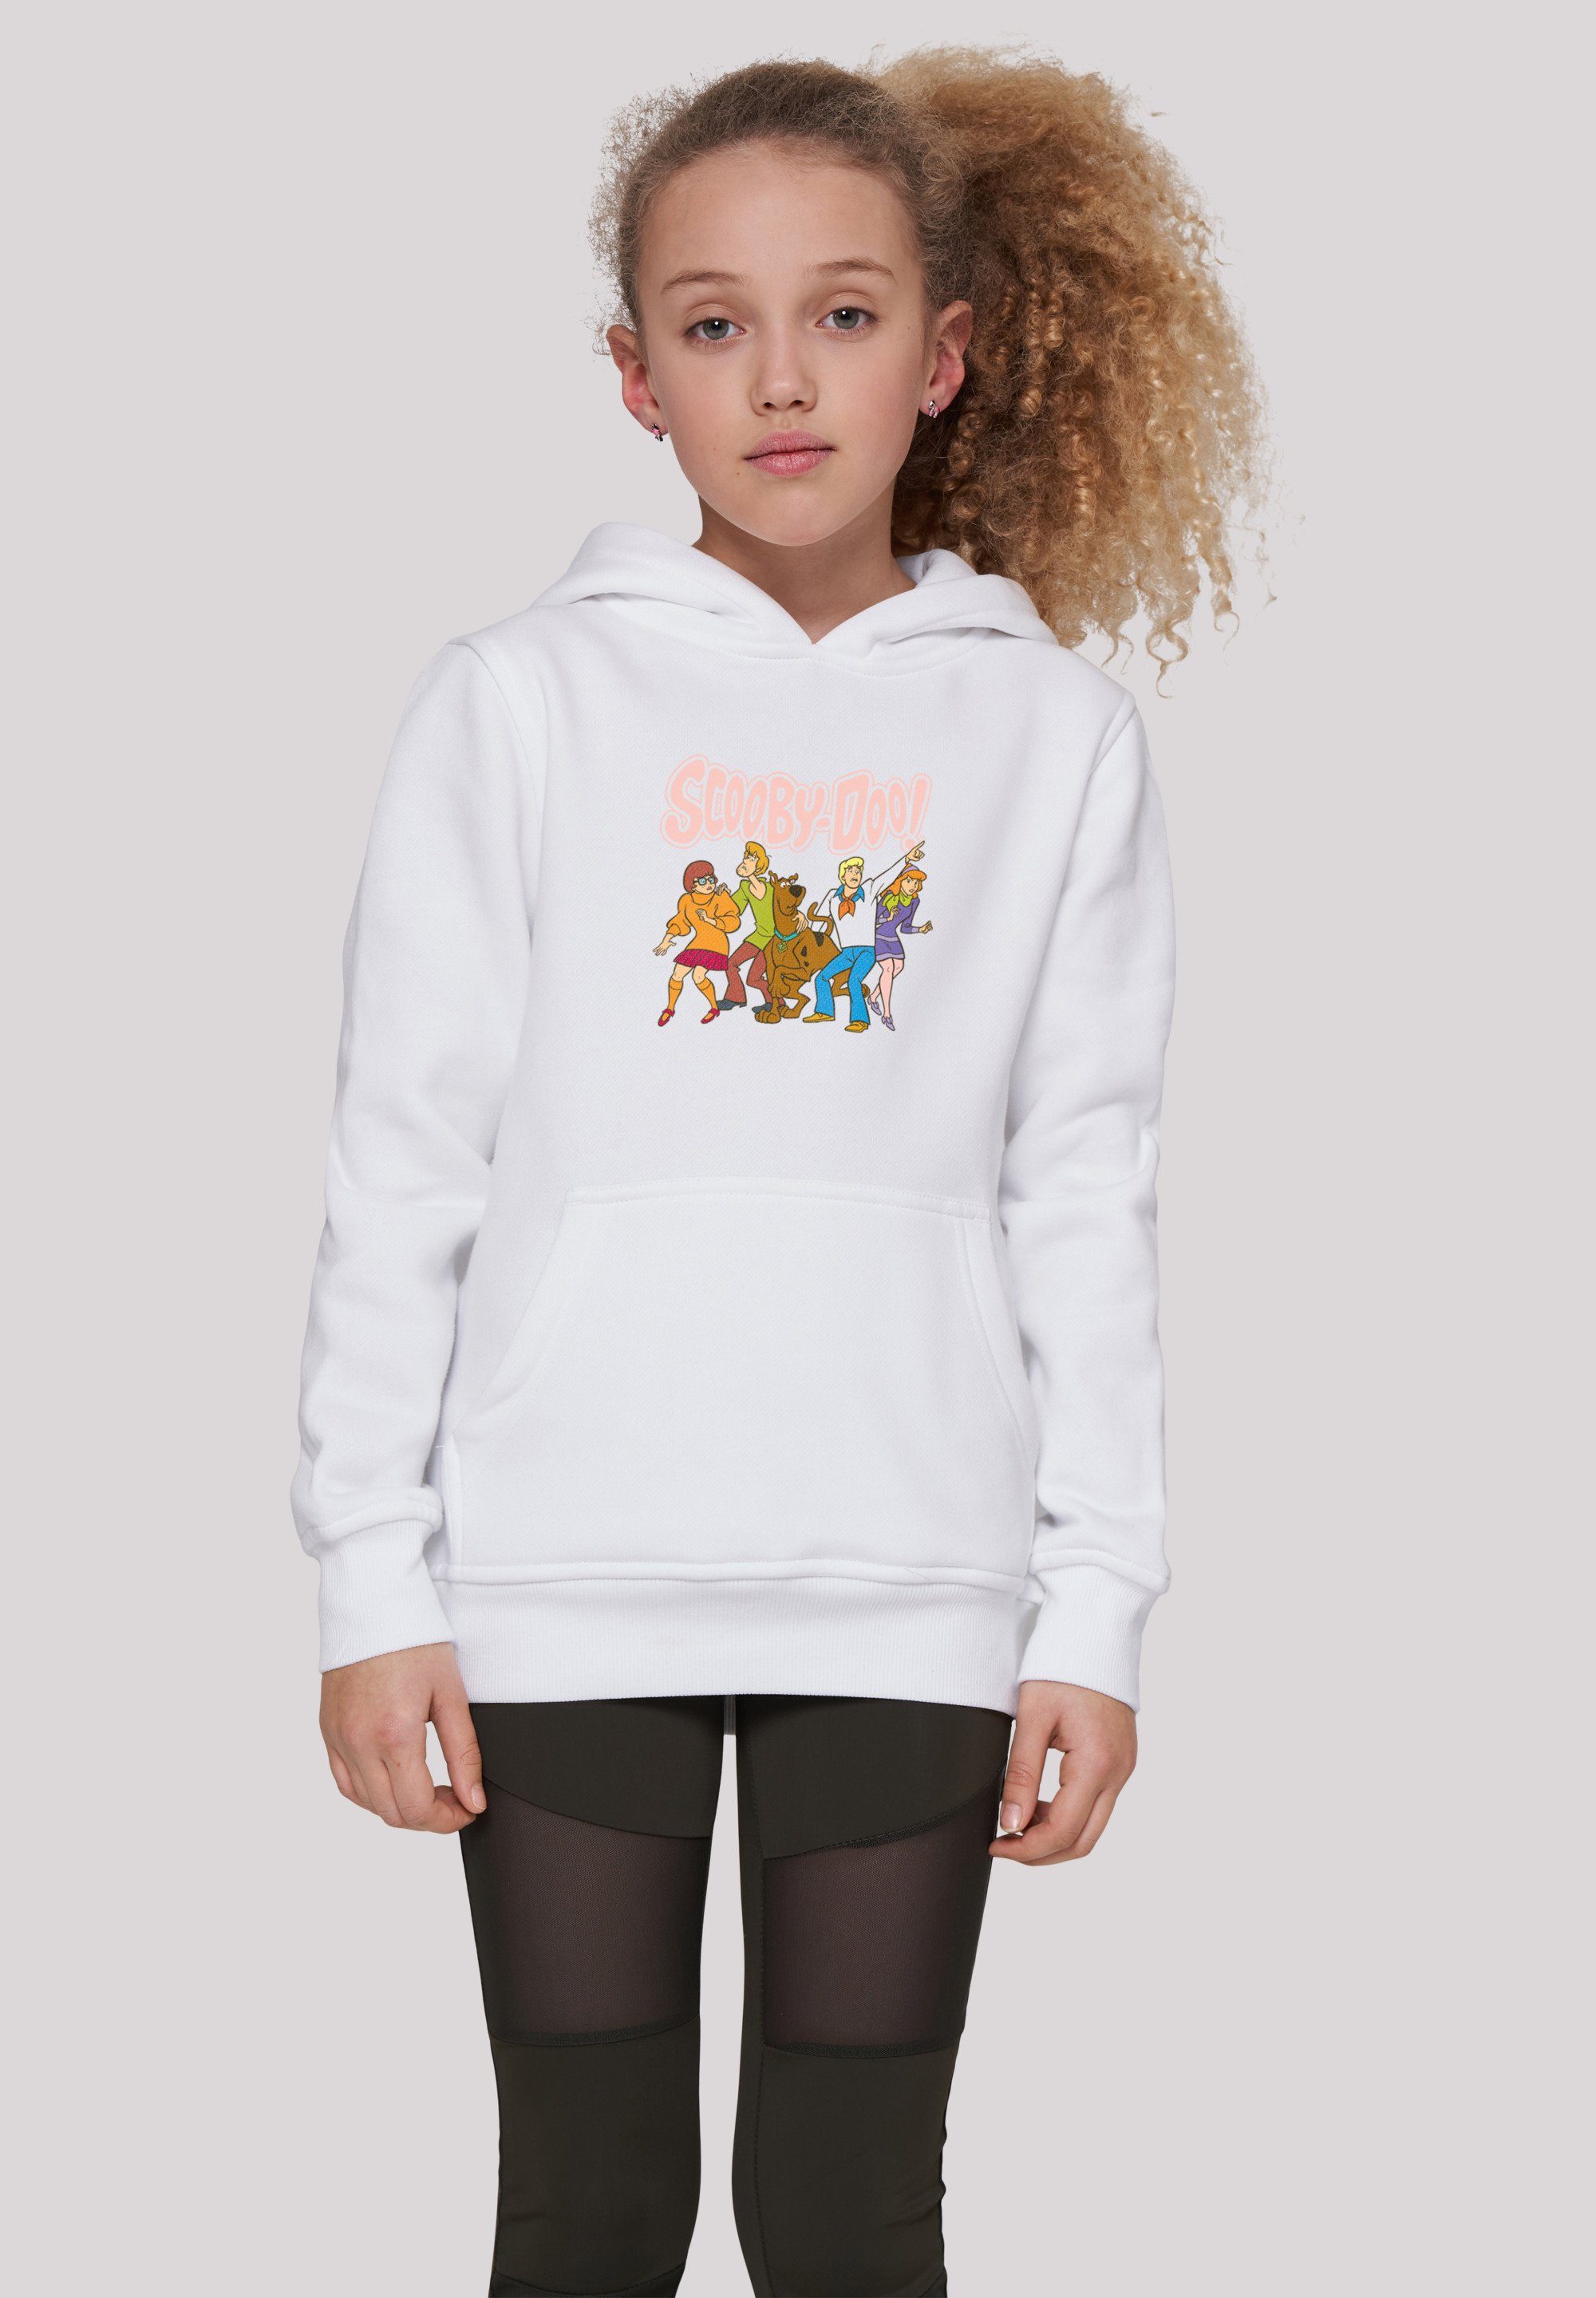 F4NT4STIC Sweatshirt Scooby Doo Classic Group Unisex Kinder,Premium Merch,Jungen,Mädchen,Bedruckt weiß